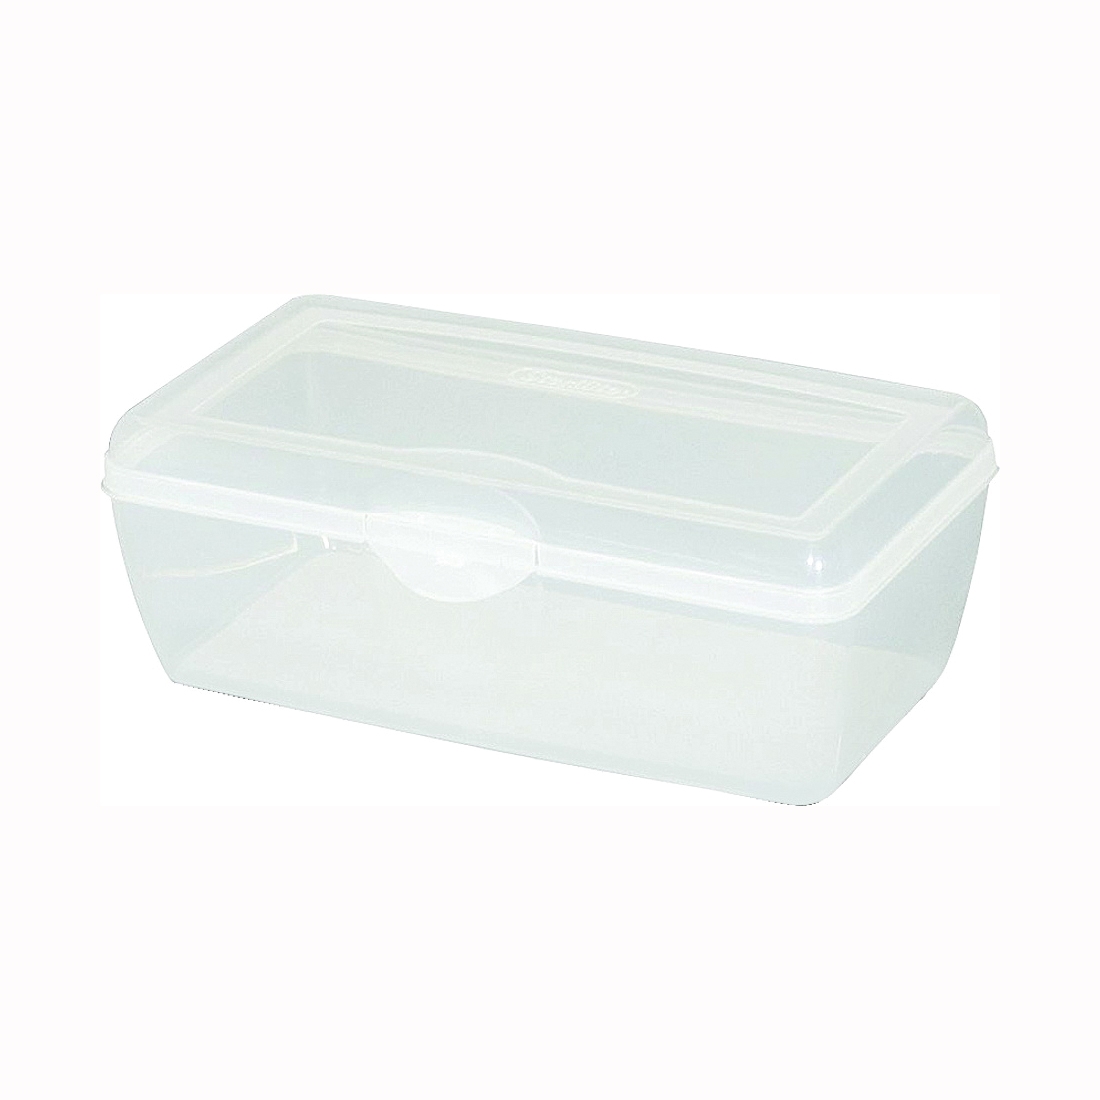 Sterilite Ultra Seal Bowl, 8.1 Quart, Plastic Containers